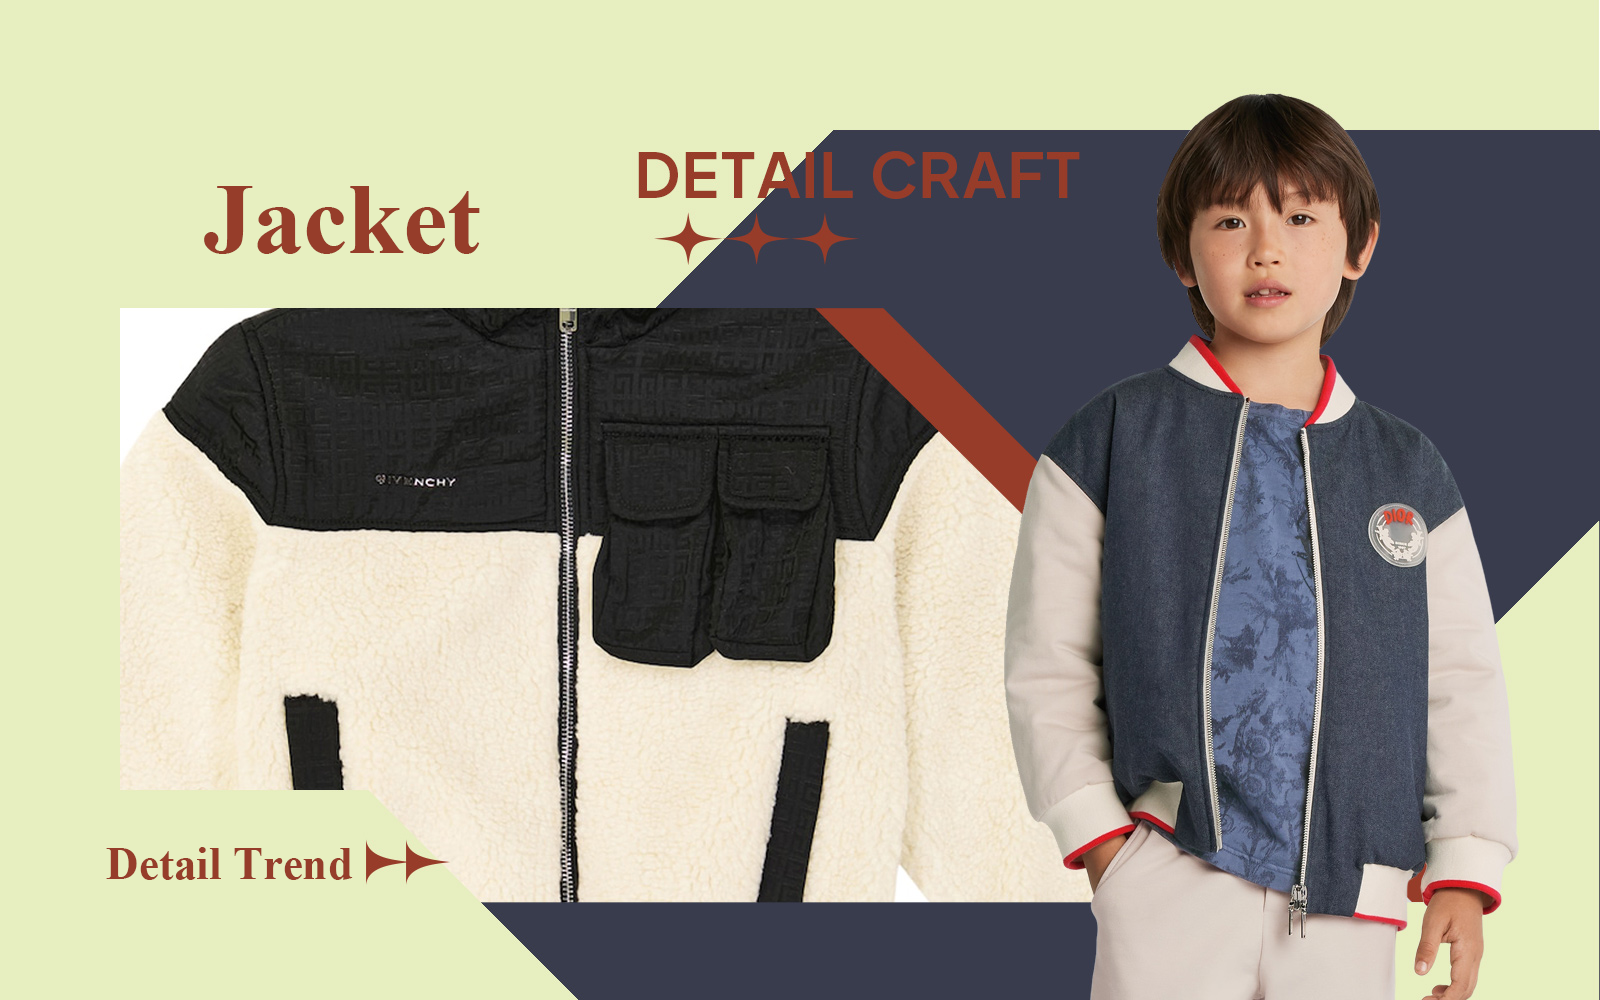 Jacket -- The Detail & Craft Trend for Boyswear